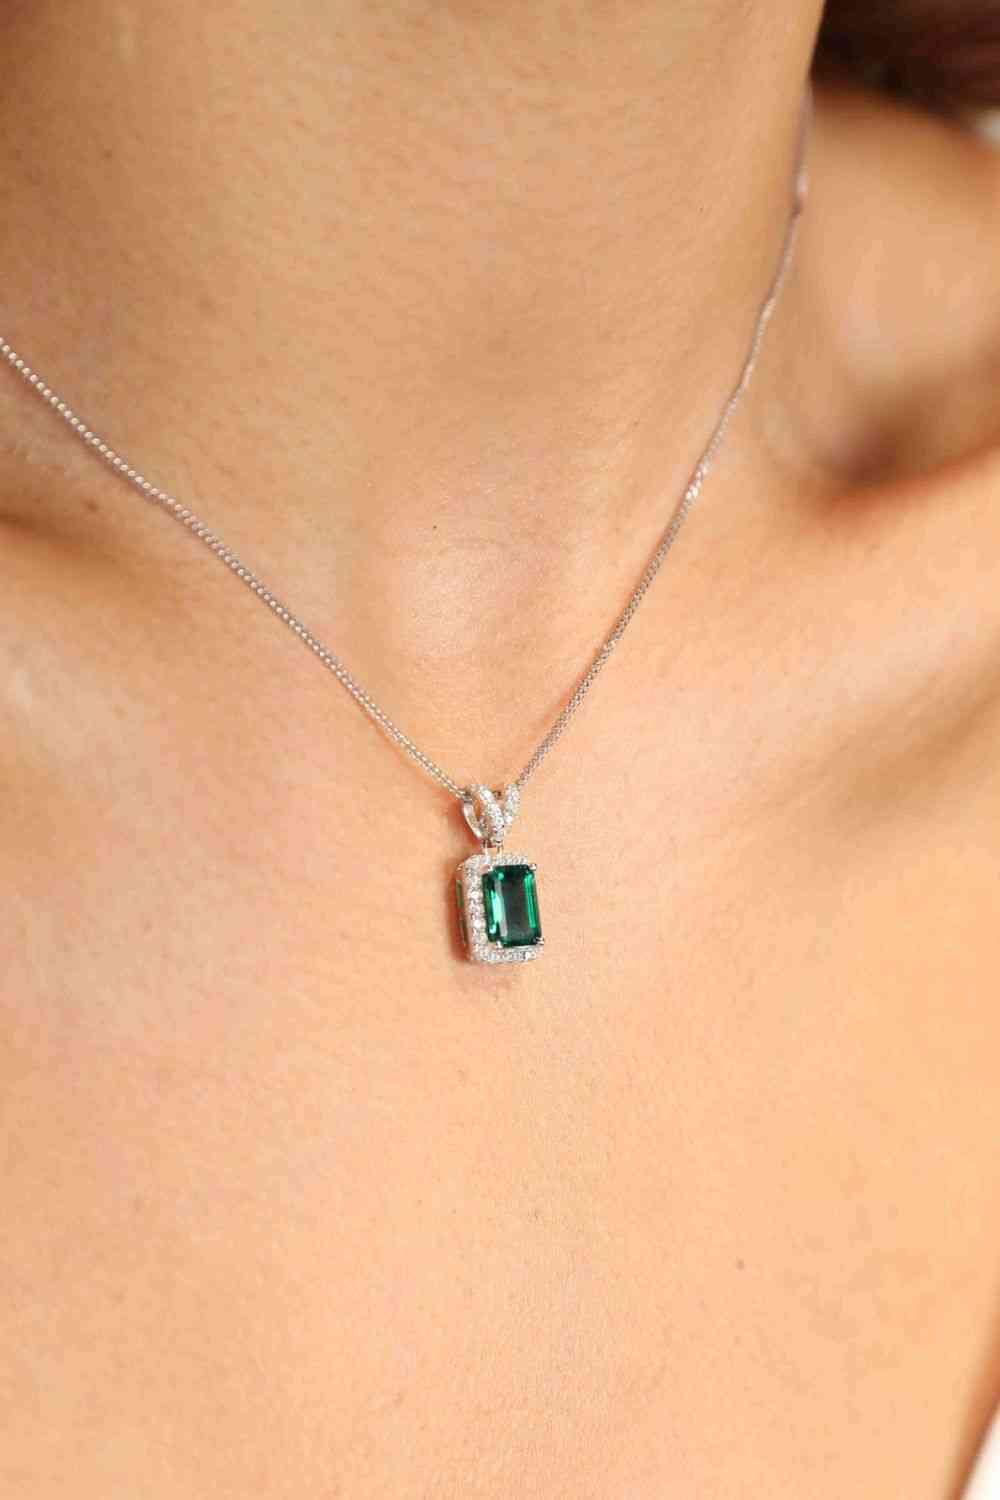 Adored 1.25 Carat Lab-Grown Emerald Pendant Necklace - Sydney So Sweet